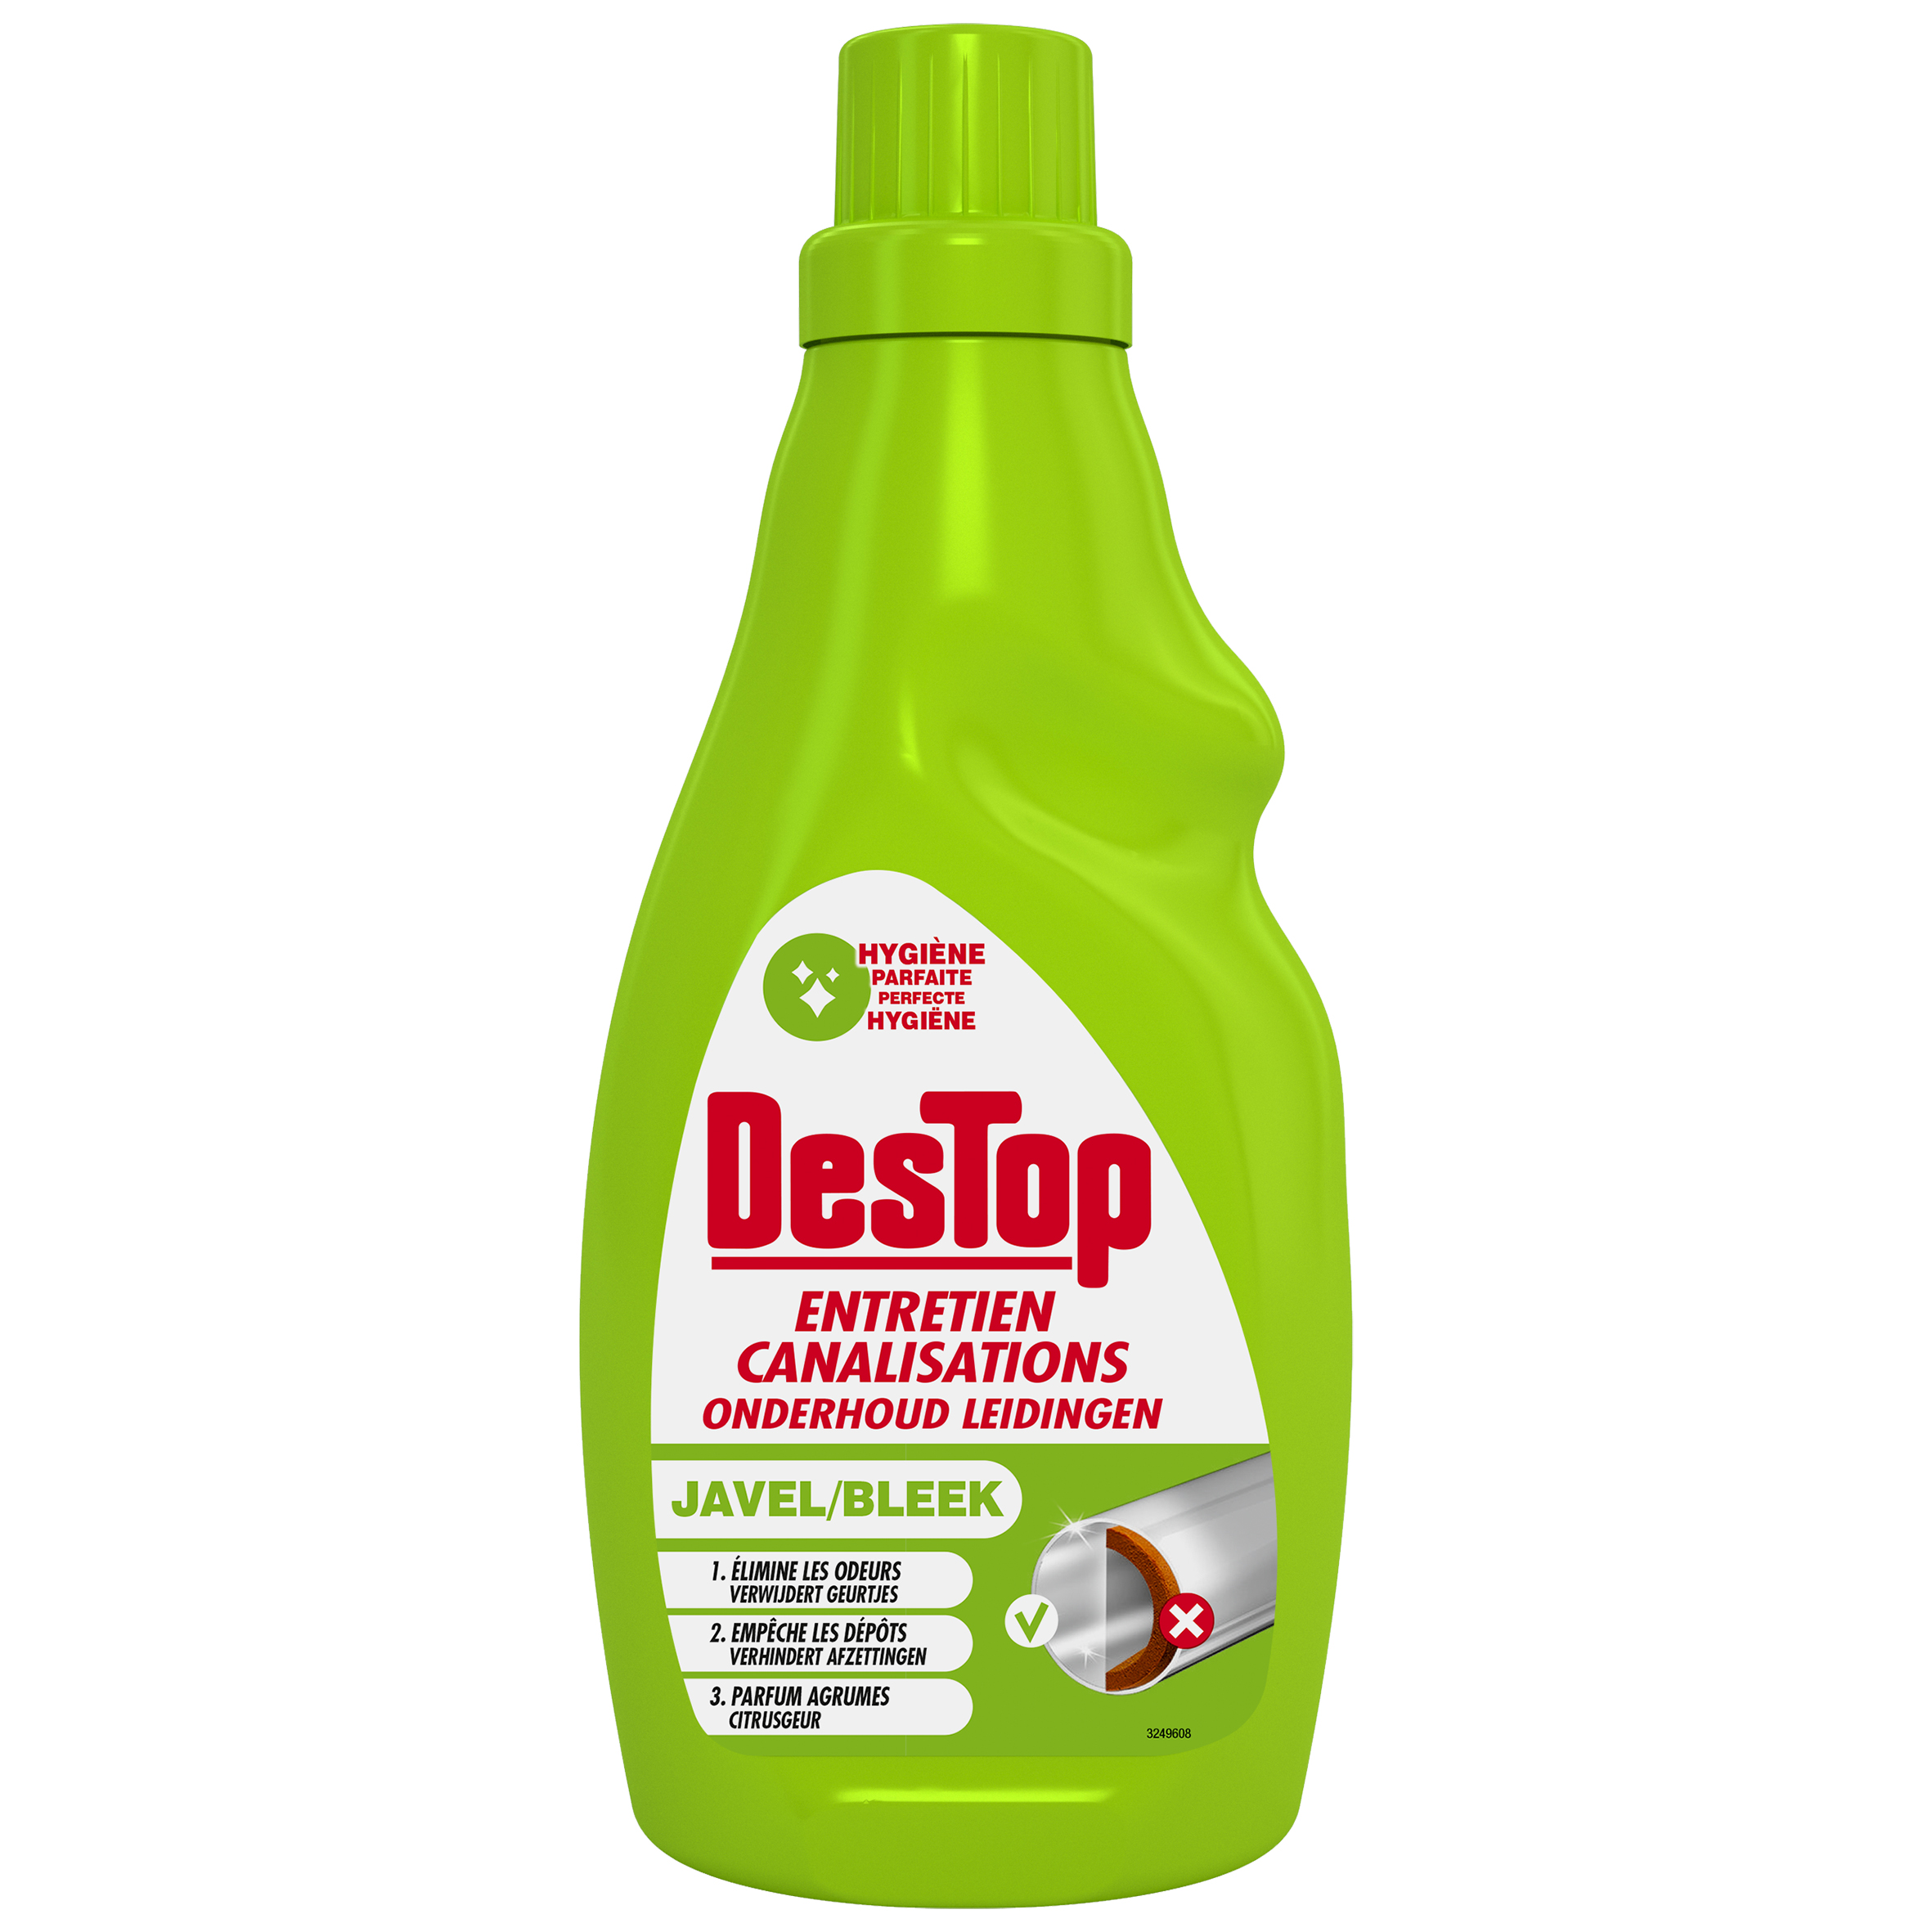 Destop - Gel javel déboucheur turbo (500 ml), Delivery Near You